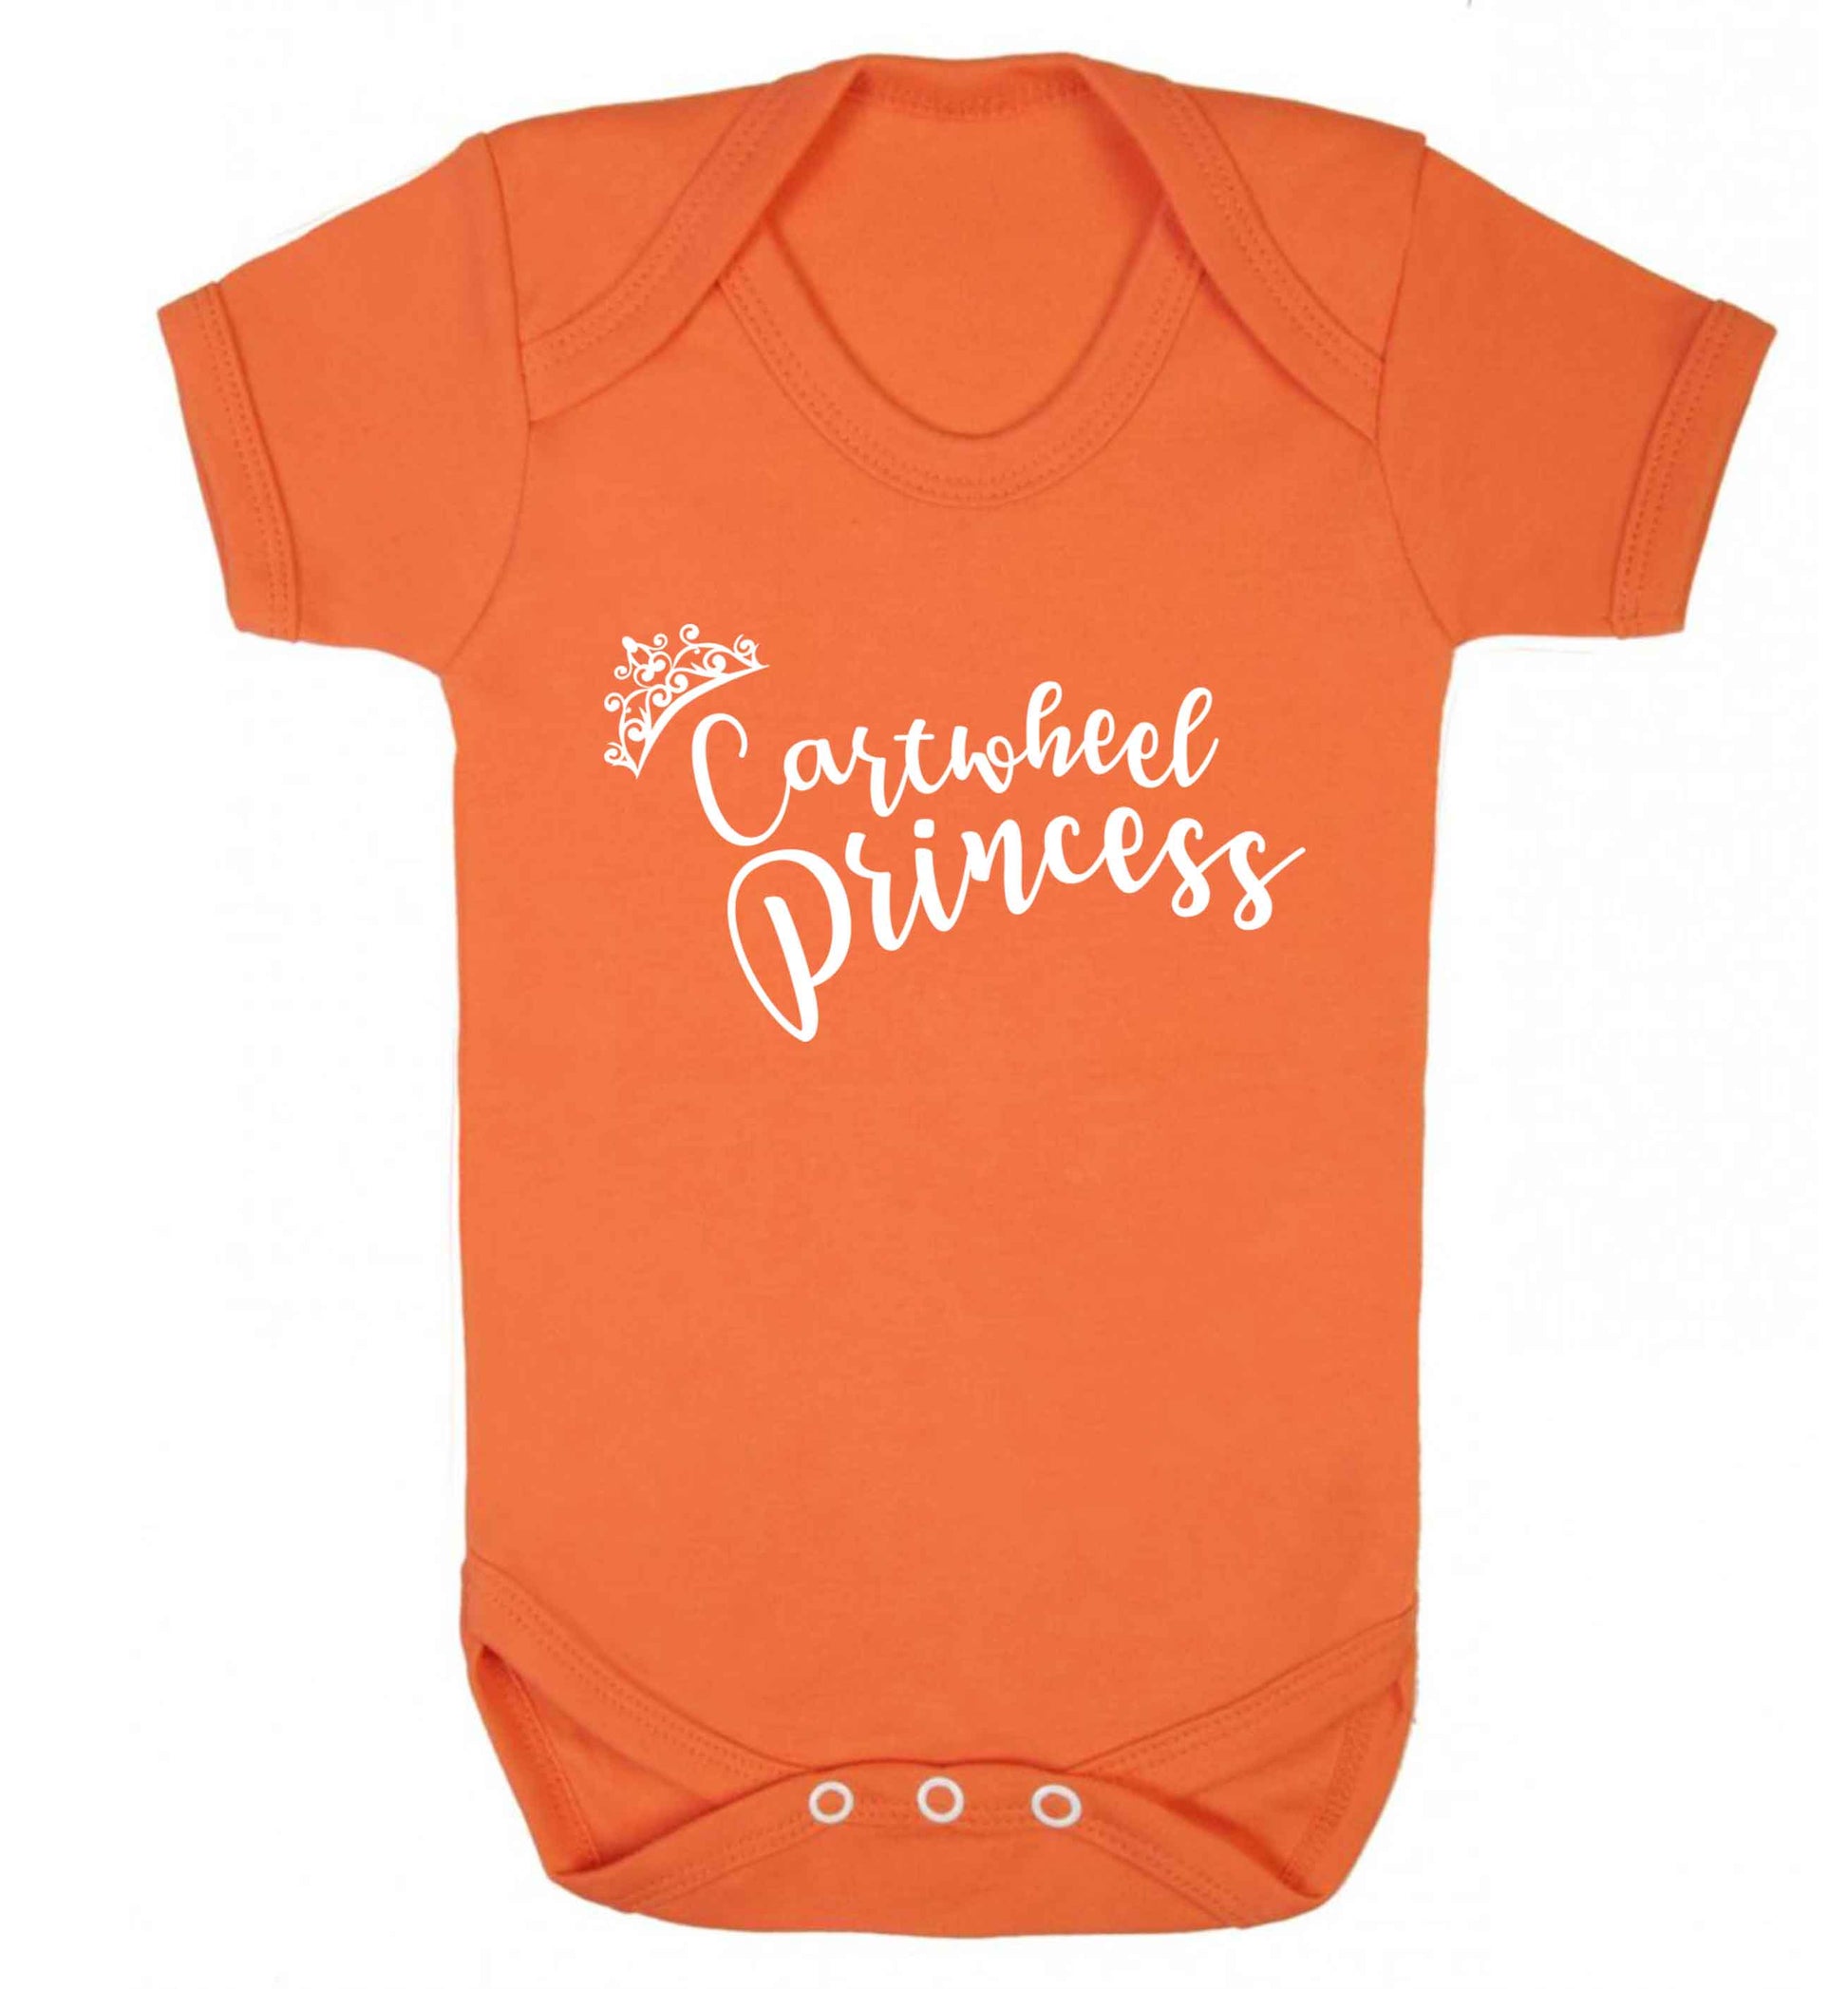 Cartwheel princess Baby Vest orange 18-24 months